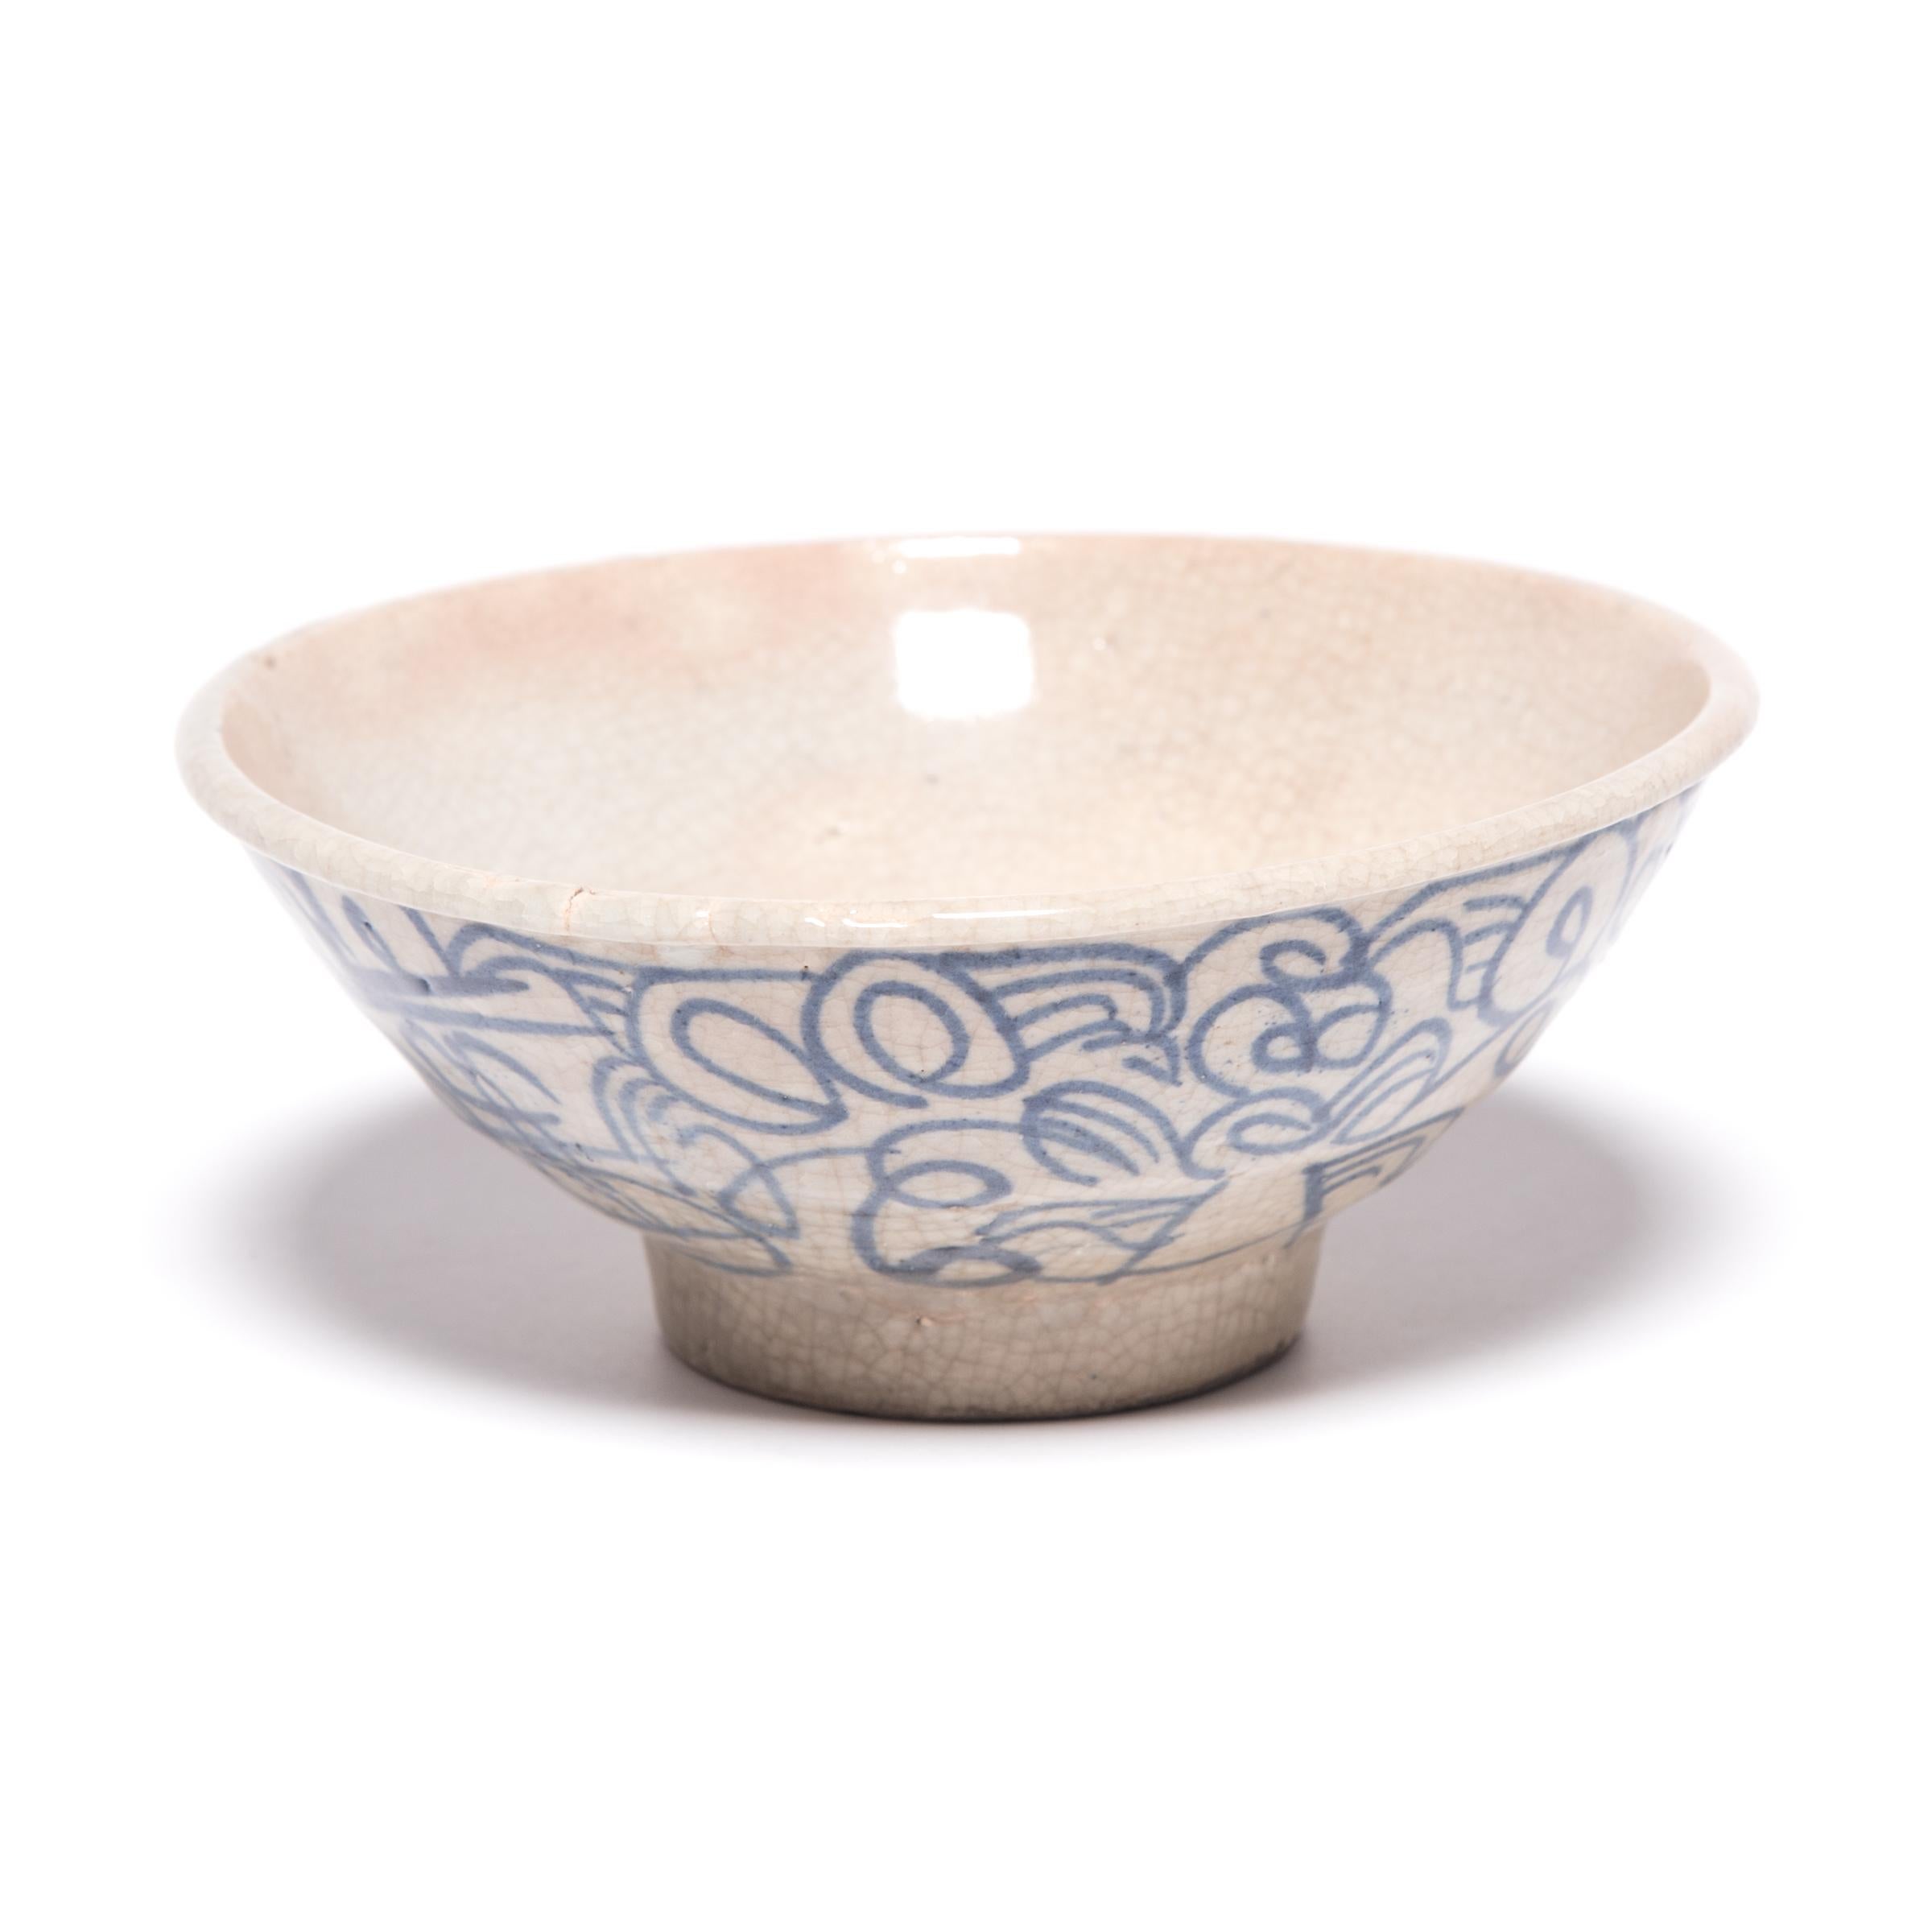 Glazed Chinese Blue and White Rice Bowl, circa 1900